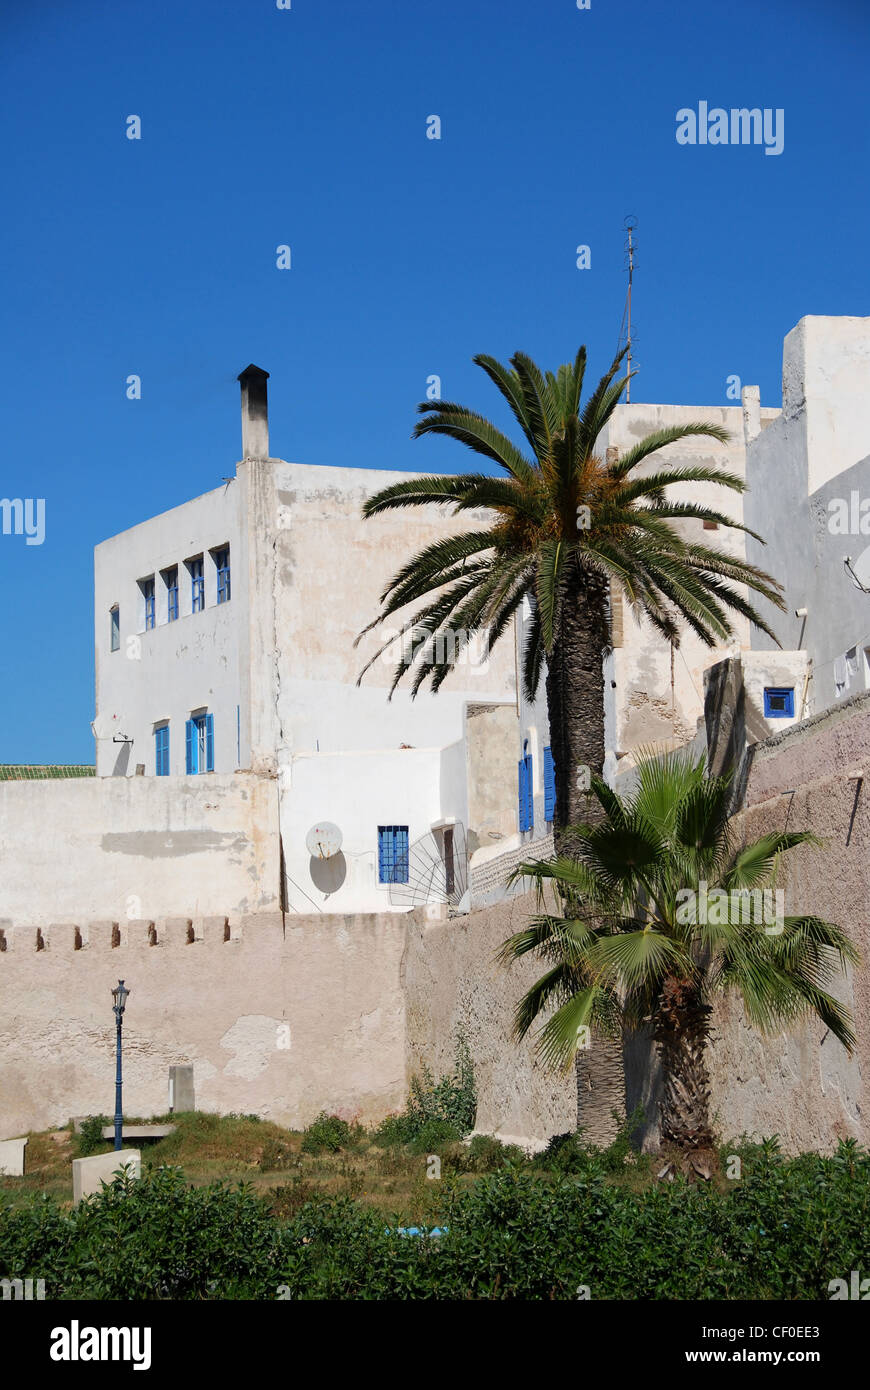 Citywall, houses, palmtrees, Essaouira, Morocco Stock Photo